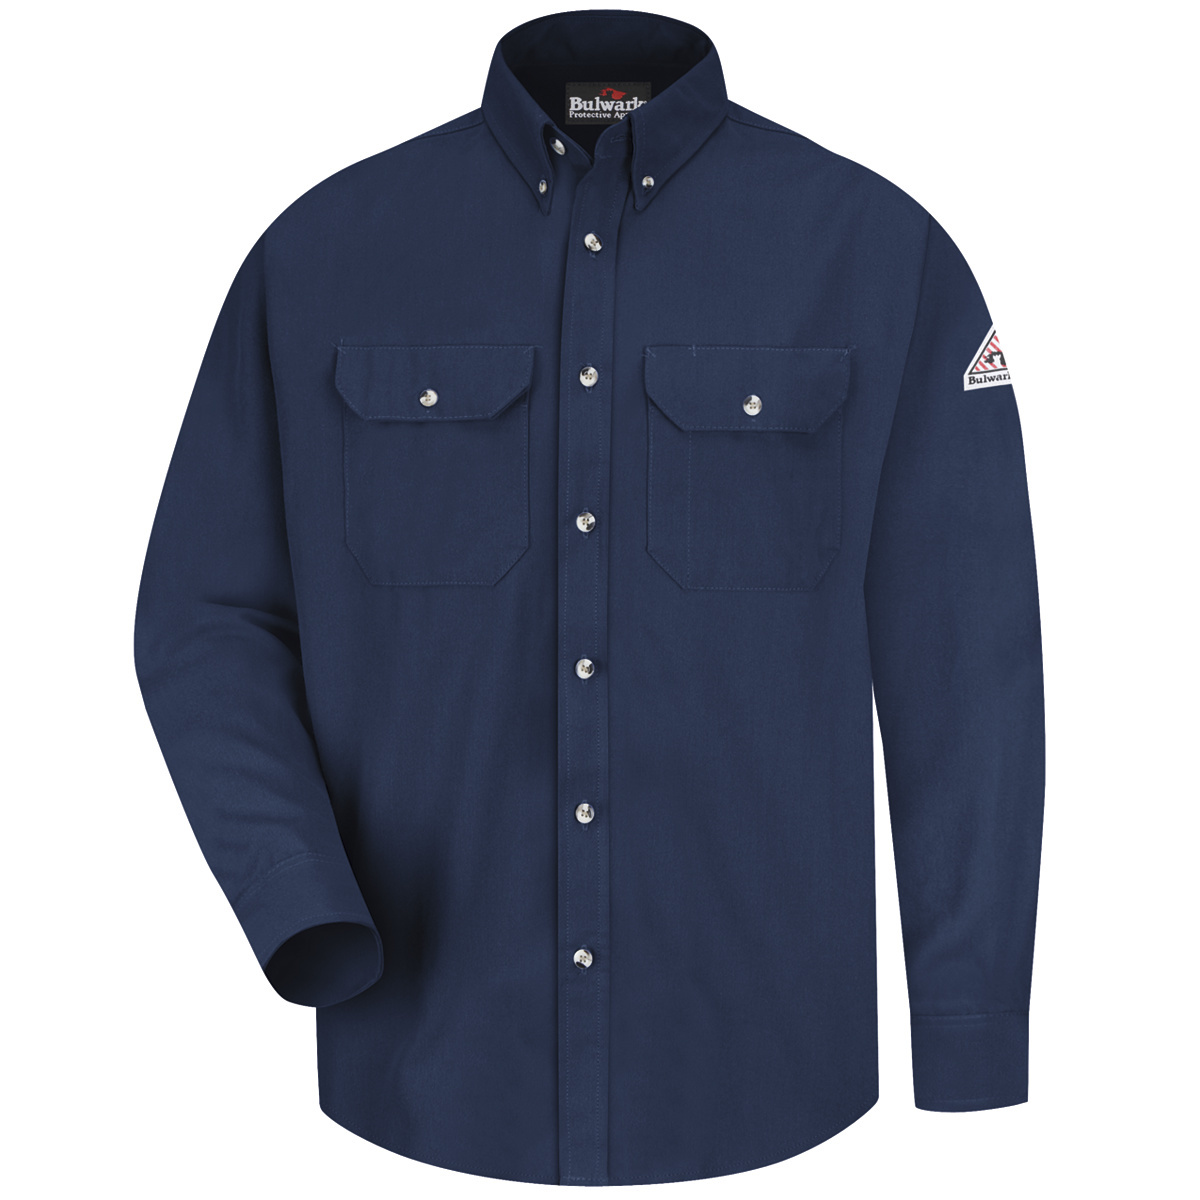 Bulwark® 3X Tall Navy Blue Modacrylic/Lyocell/Aramid Flame Resistant Dress Uniform Shirt With Button Front Closure